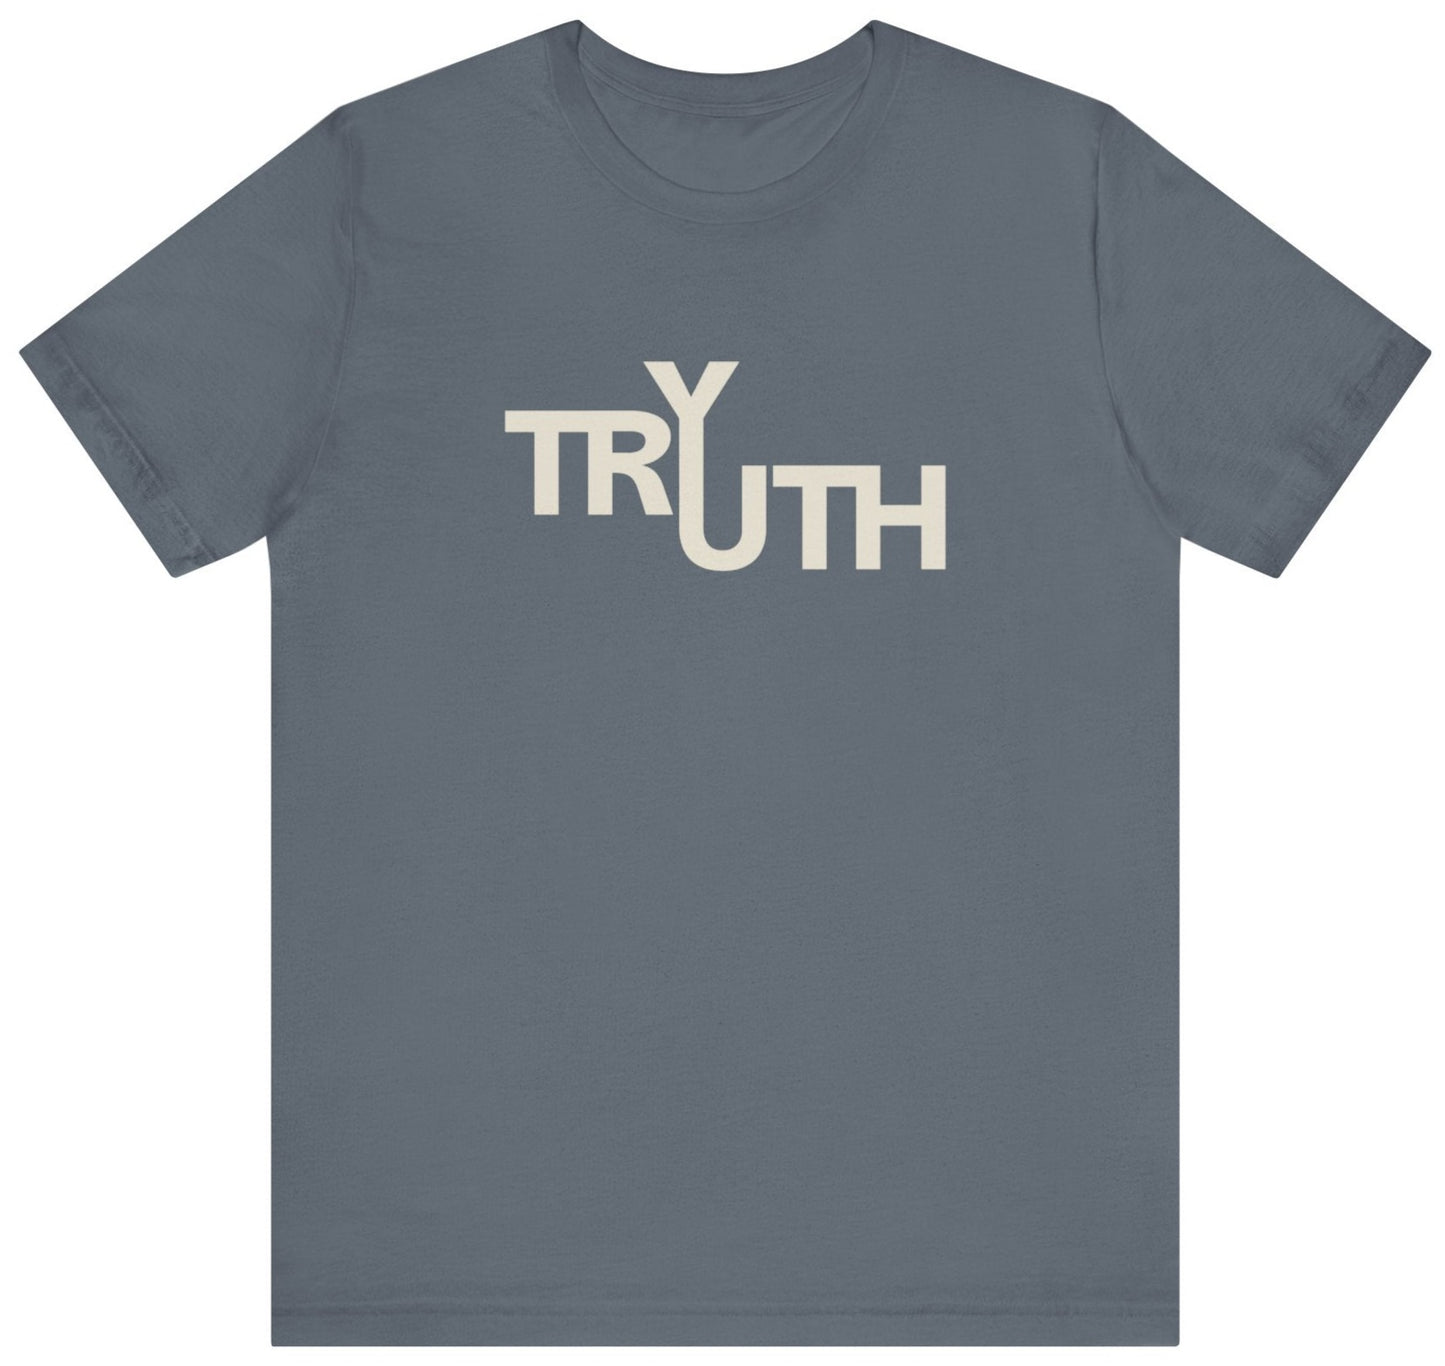 Truth t shirt